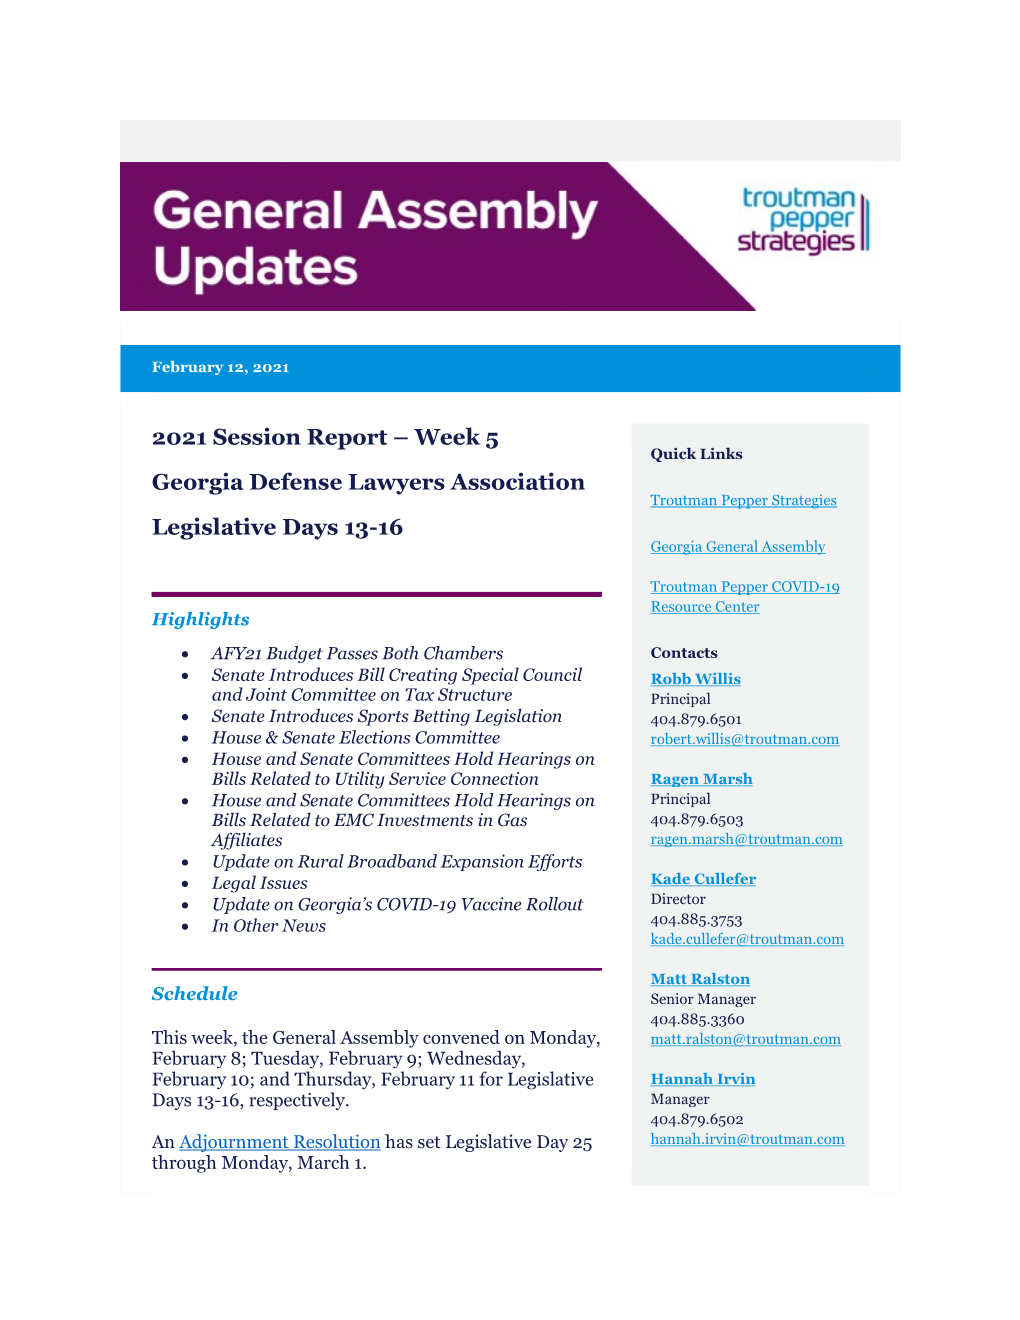 2021 Session Report – Week 5 Georgia Defense Lawyers